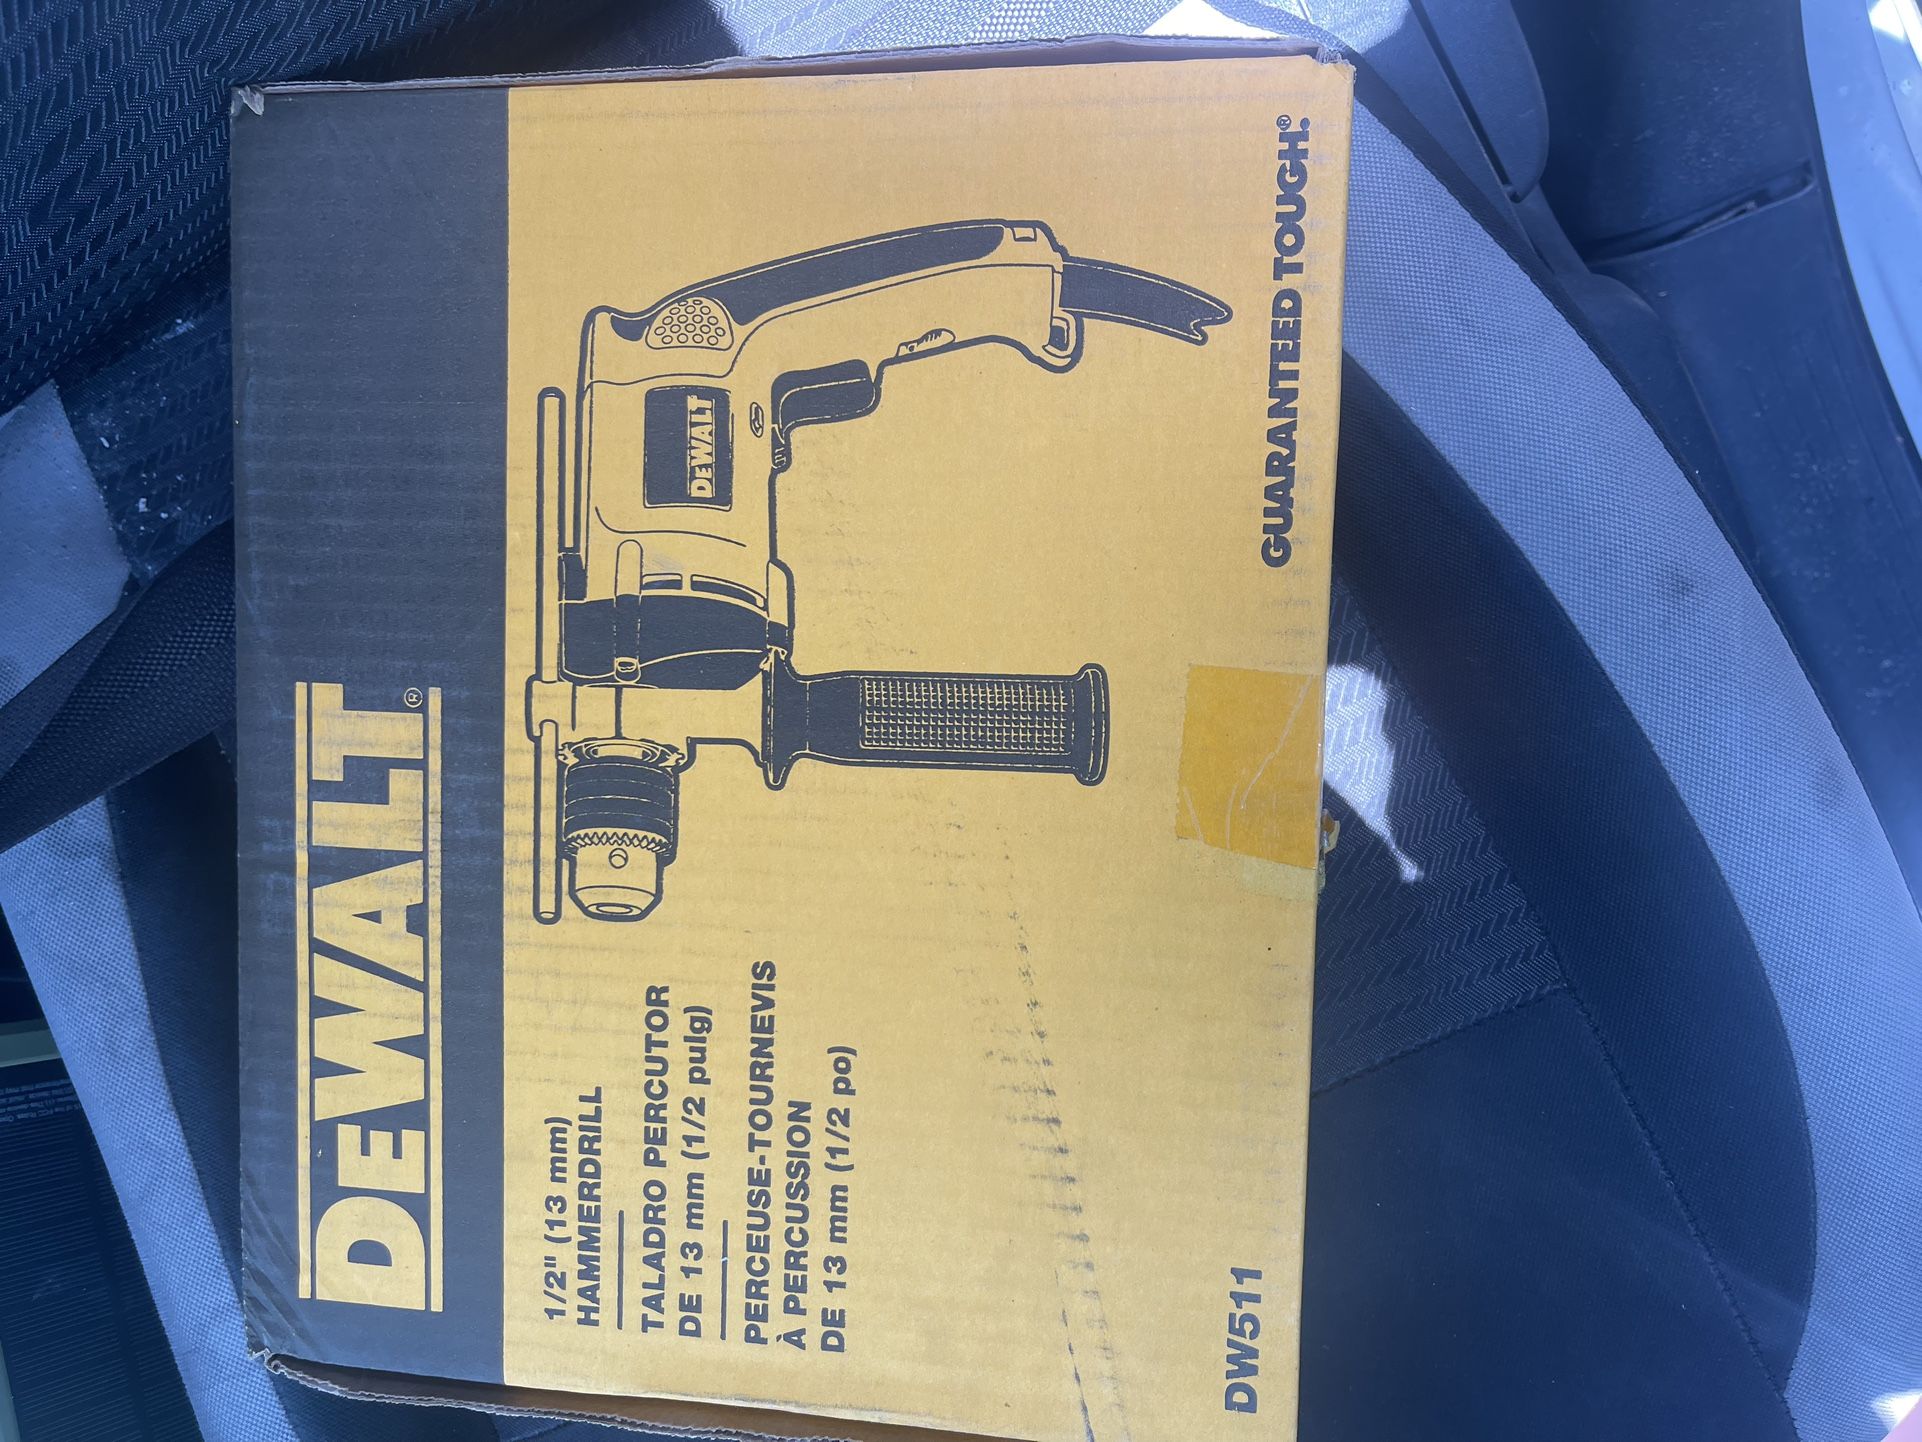 DeWalt 1/2 13mm Hammer drill 